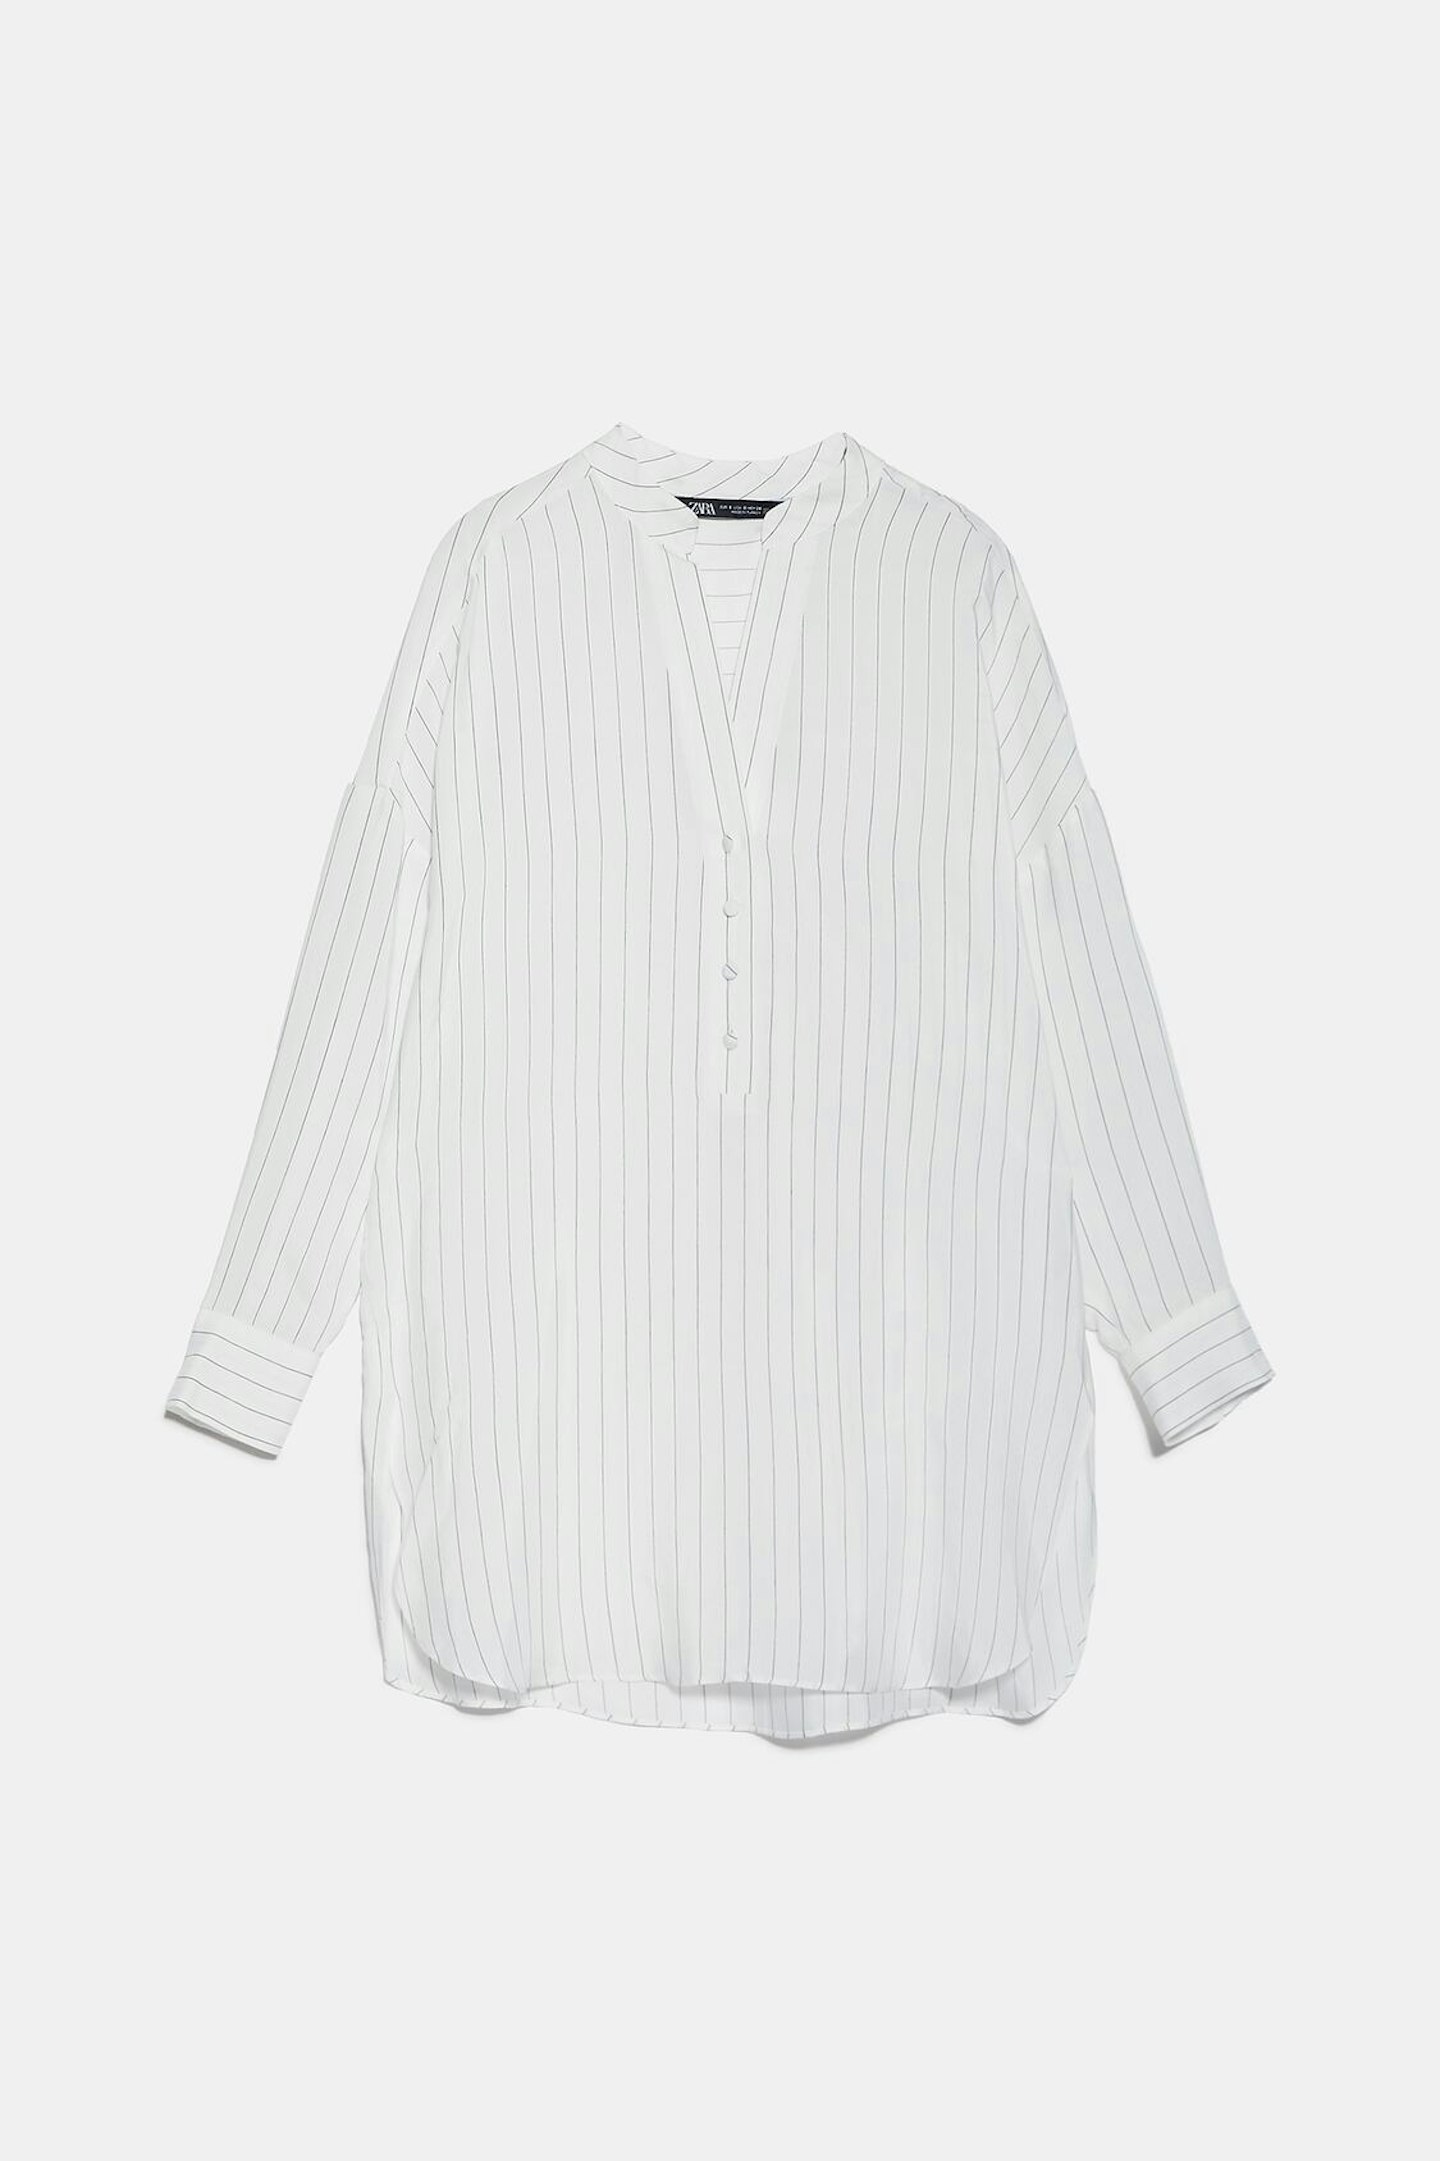 ZARA, Pinstripe Shirt, £19.99